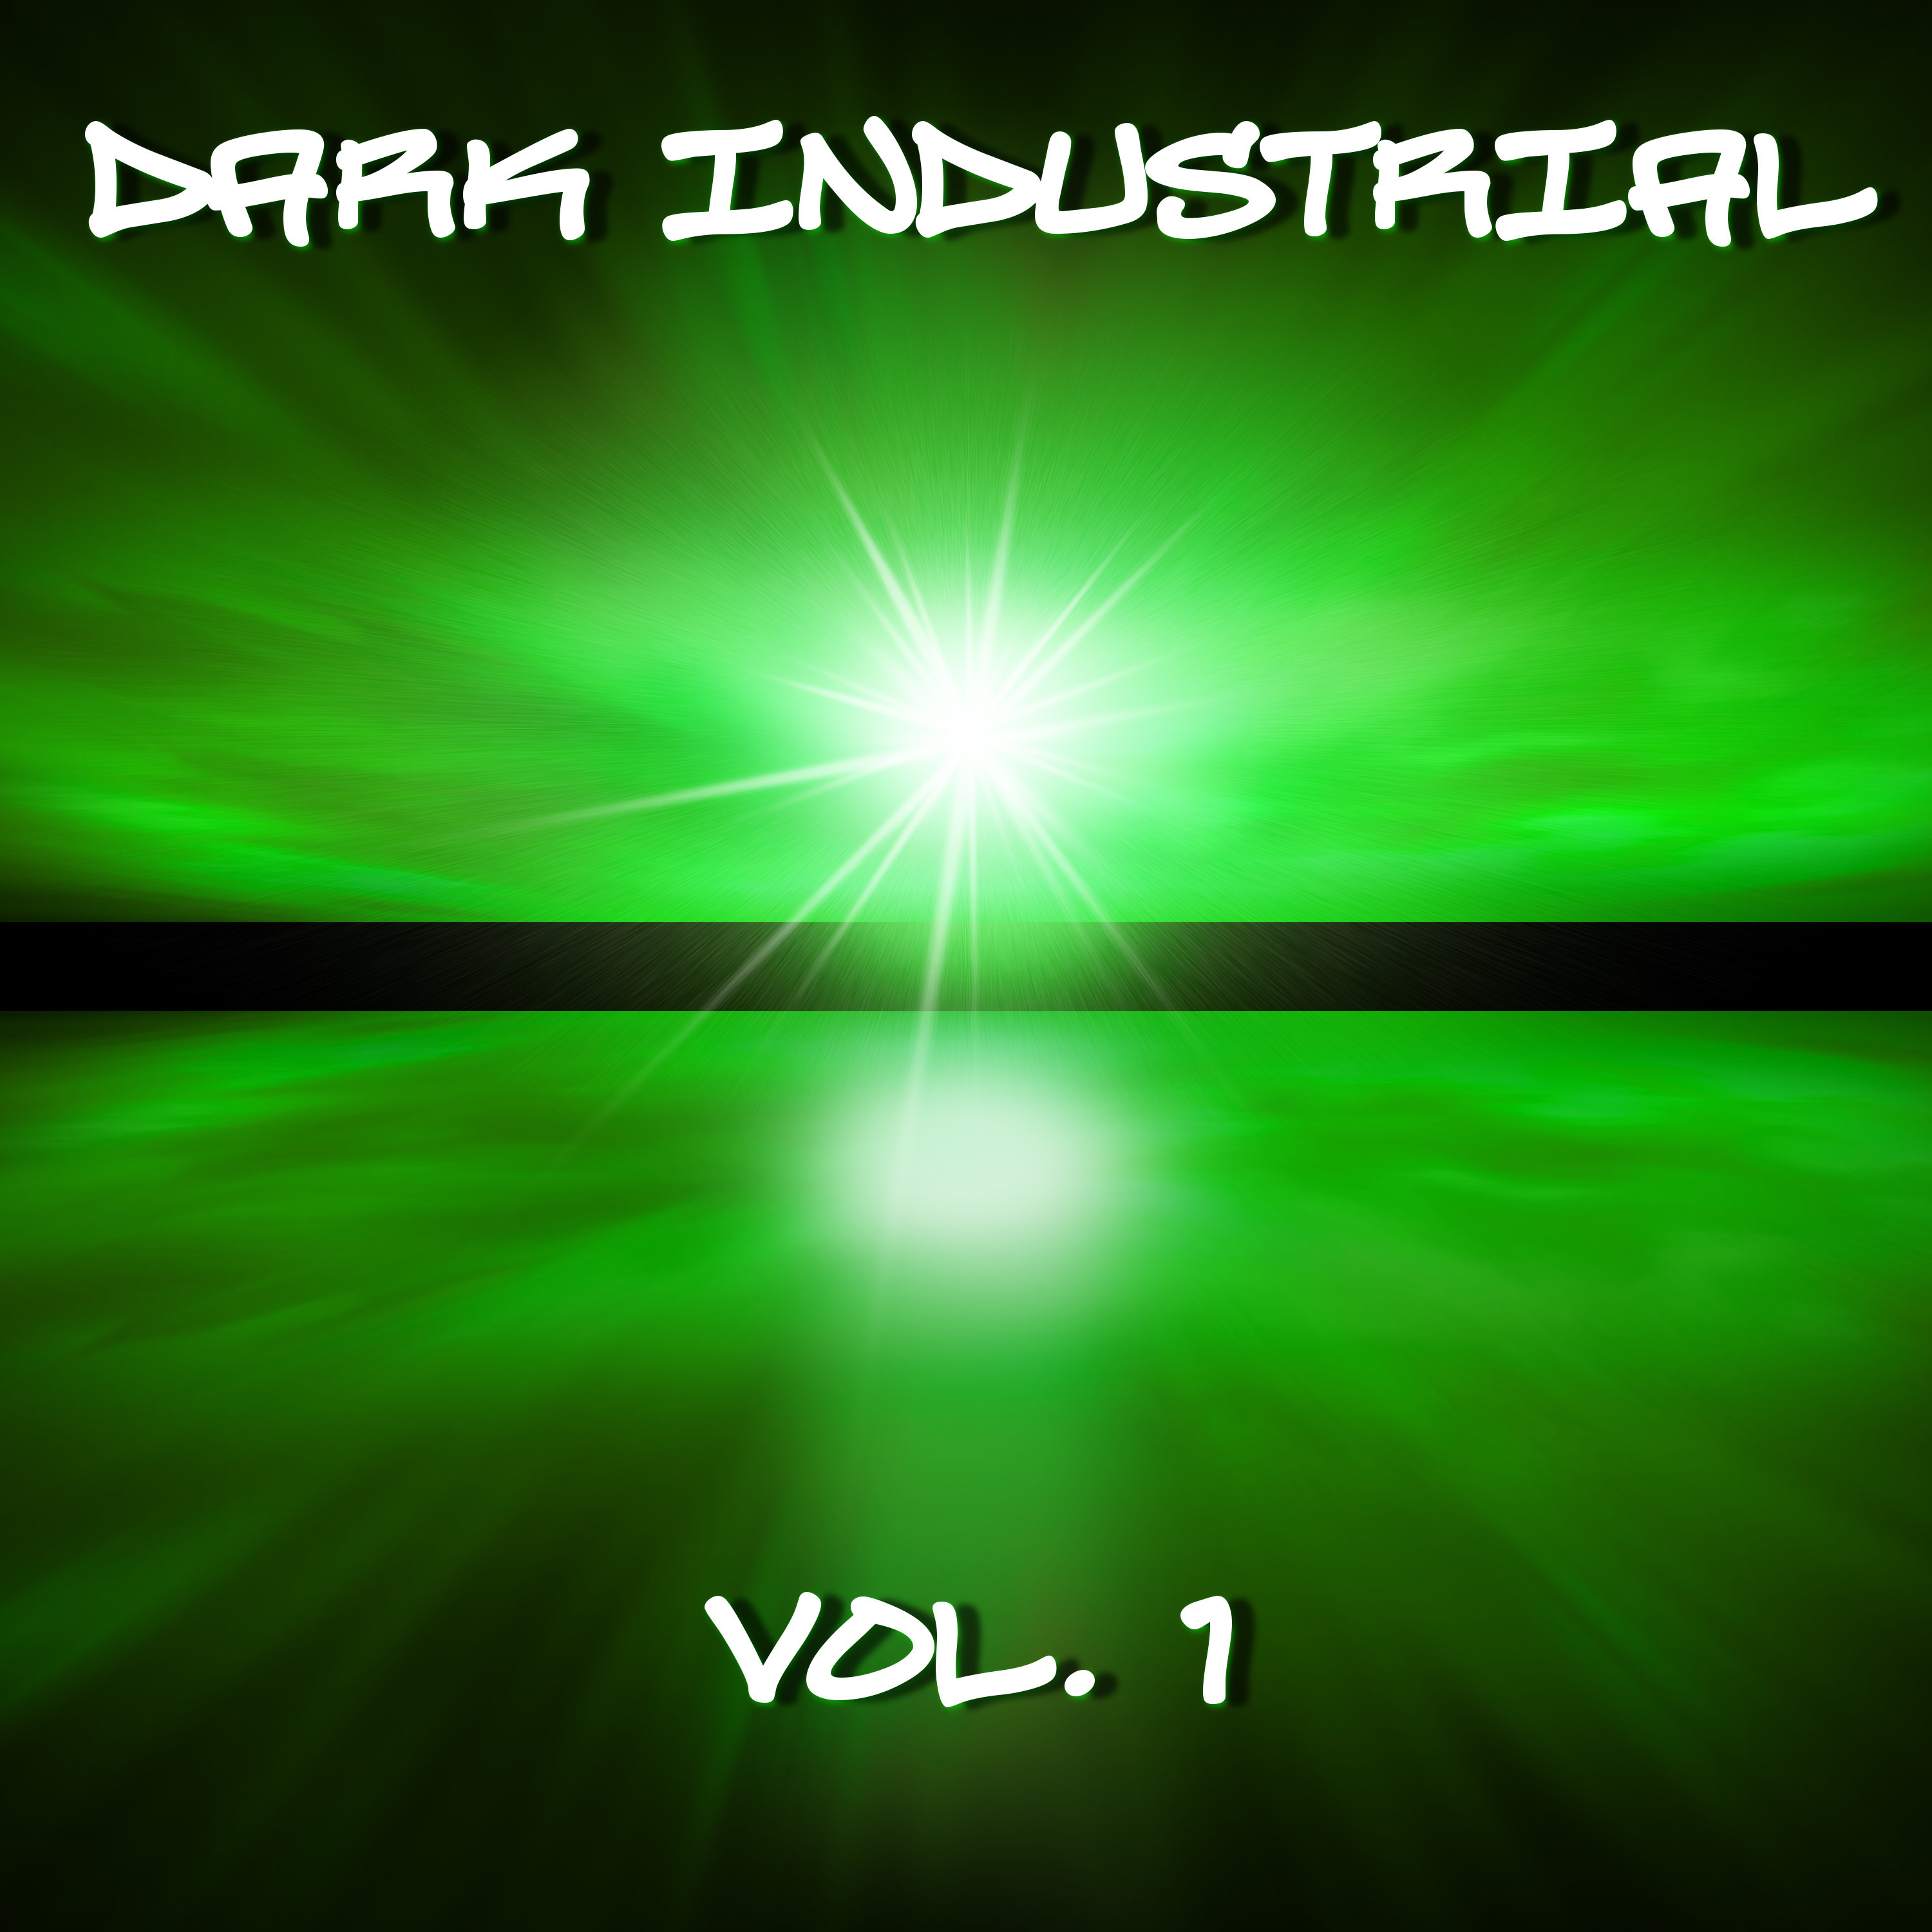 Dark Industrial, Vol. 1